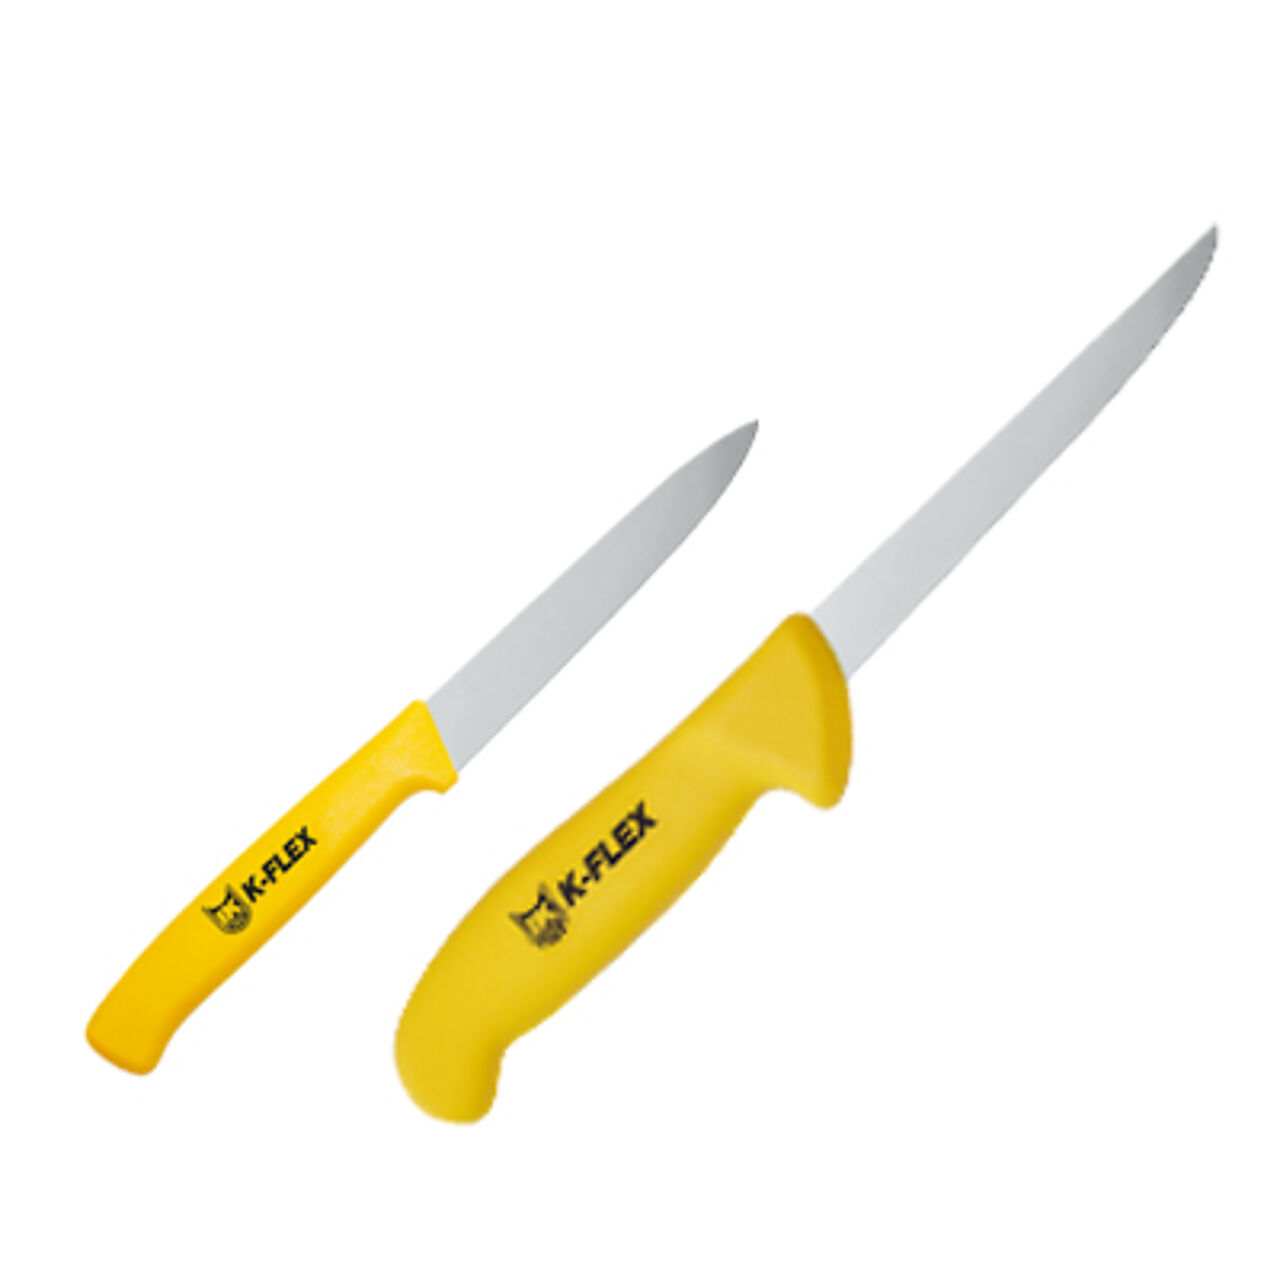 K-Flex K-Flex stor kniv (blad 15 cm) 1